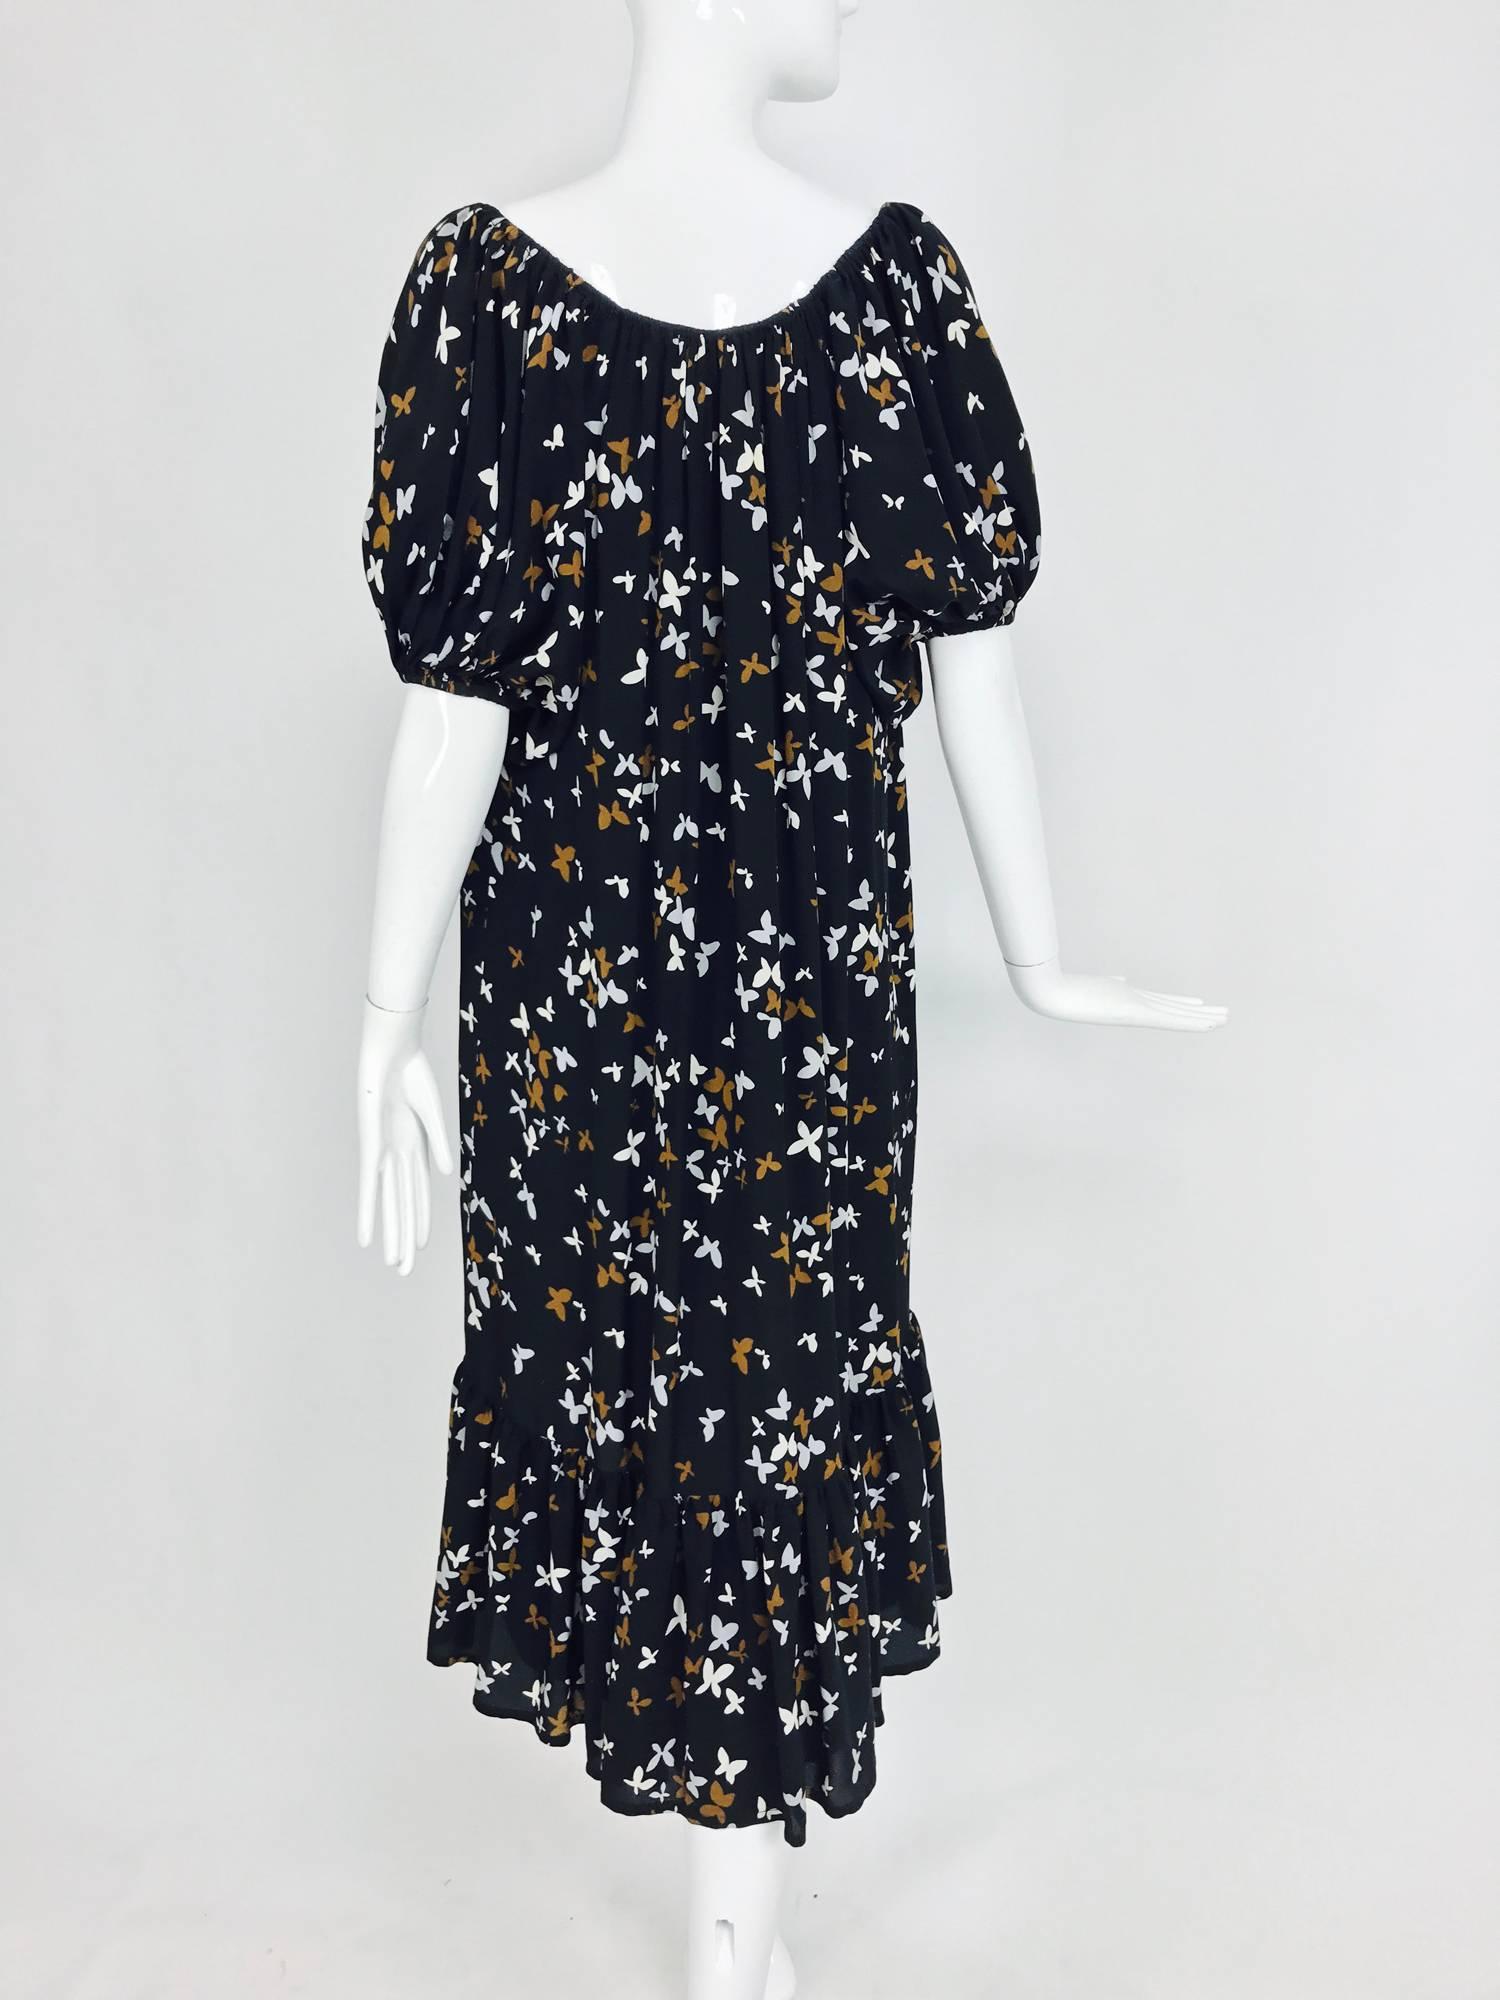 Women's Documented Yves Saint laurent butterfly print silk peasant dress 1978